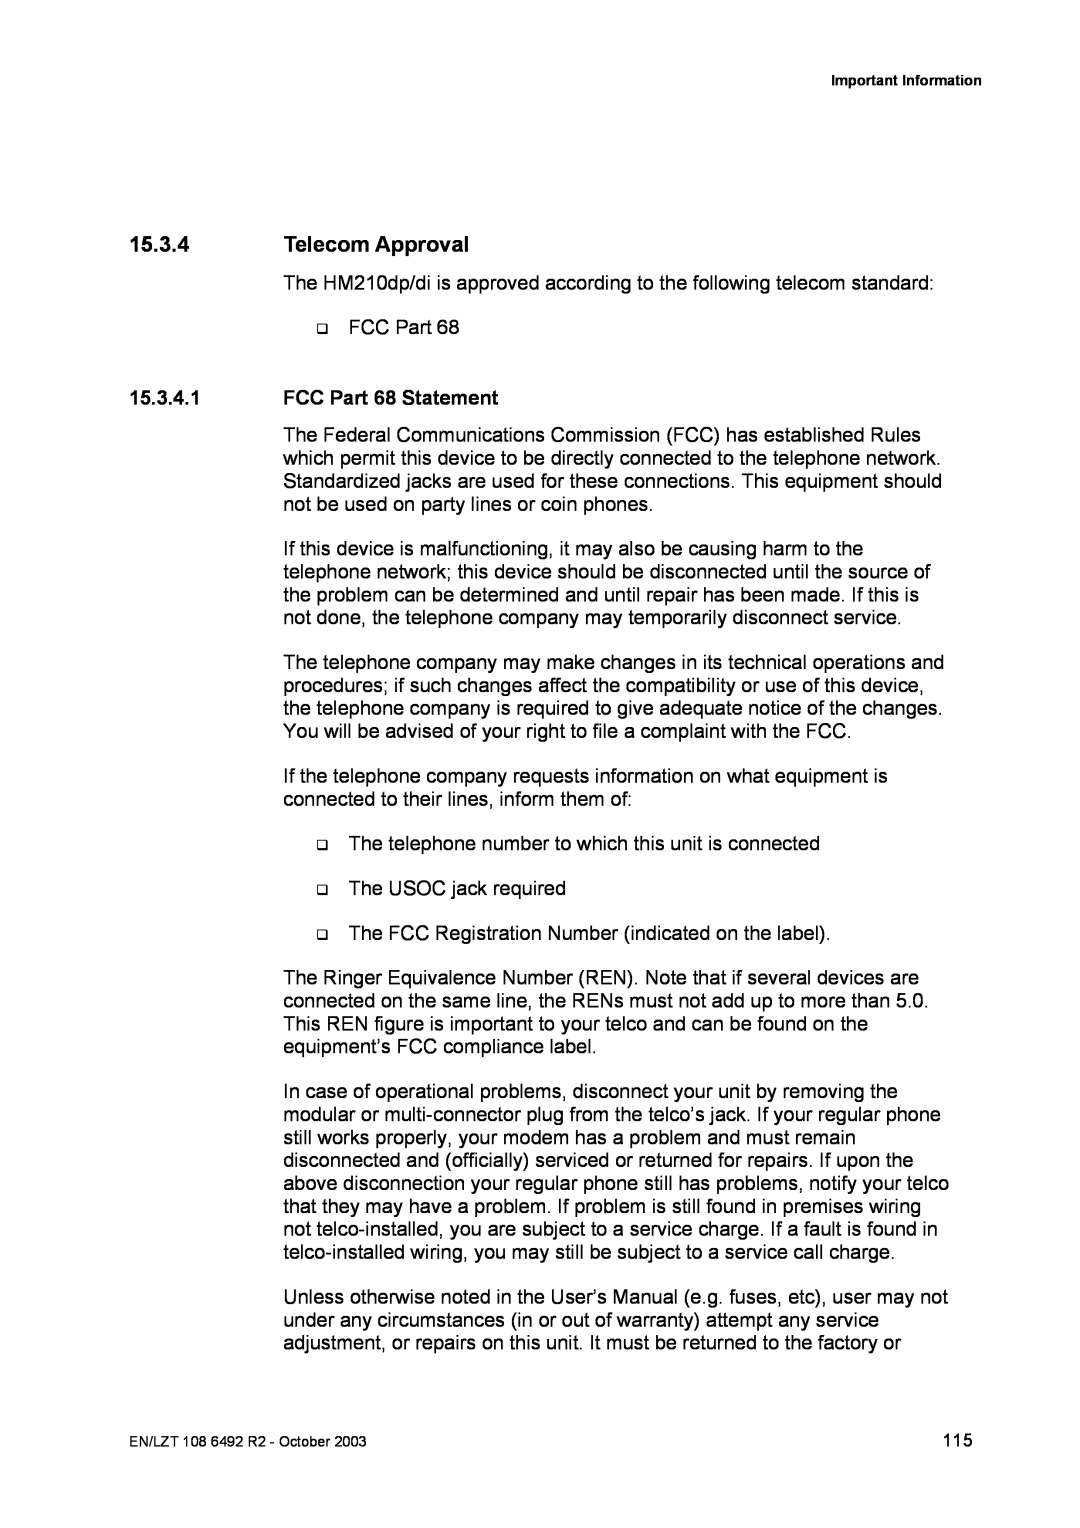 Garmin HM210DP/DI manual Telecom Approval, FCC Part 68 Statement 